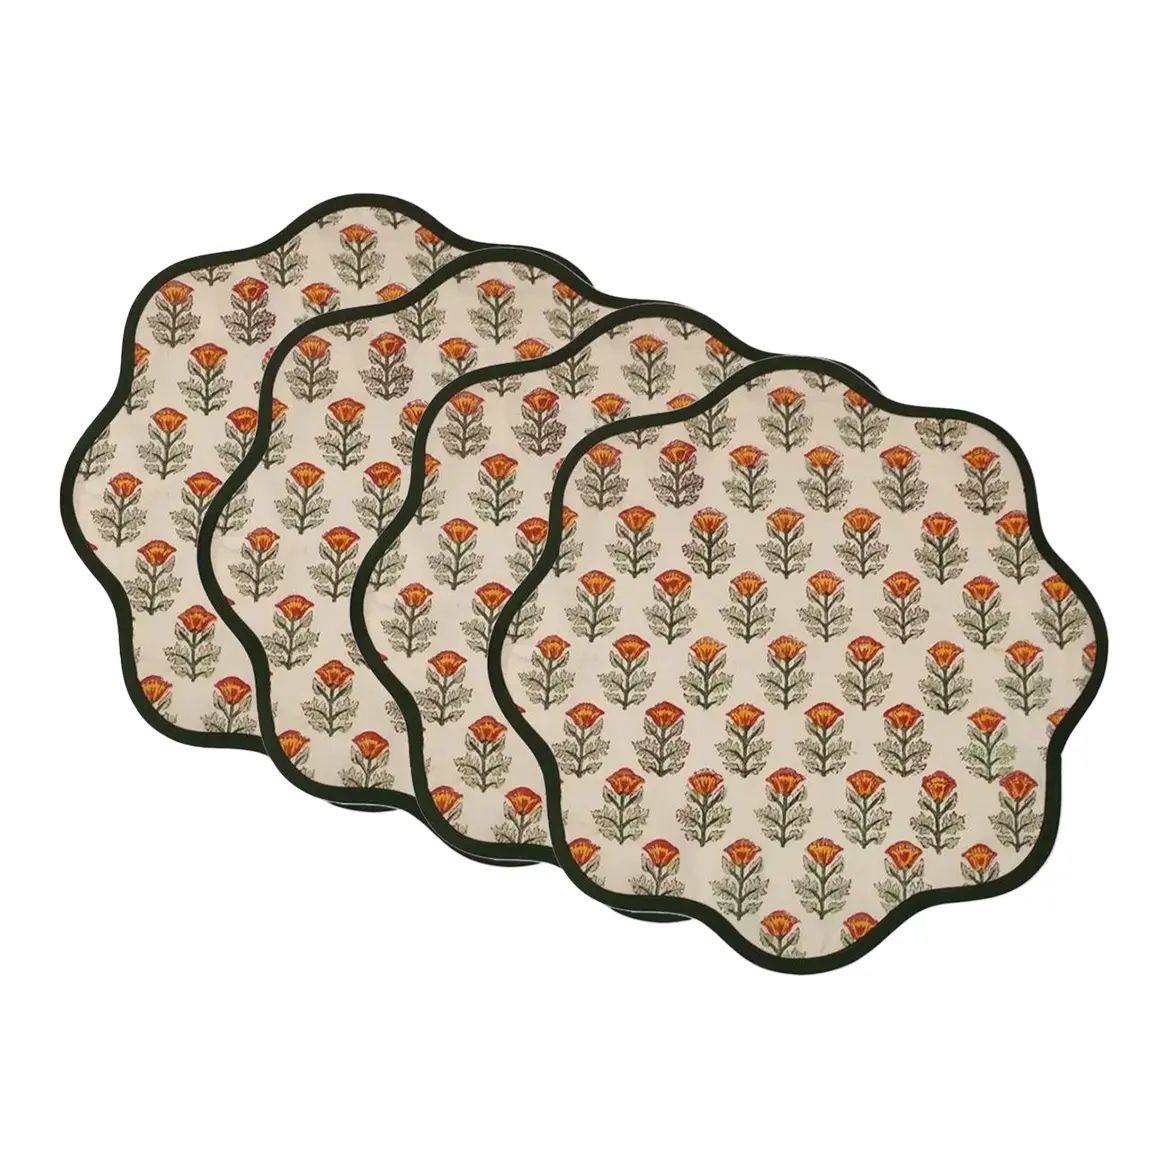 Handmade Round Scalloped Autumn Floral Placemats, Cream with Dark Green Trim - Set of 4 | Chairish